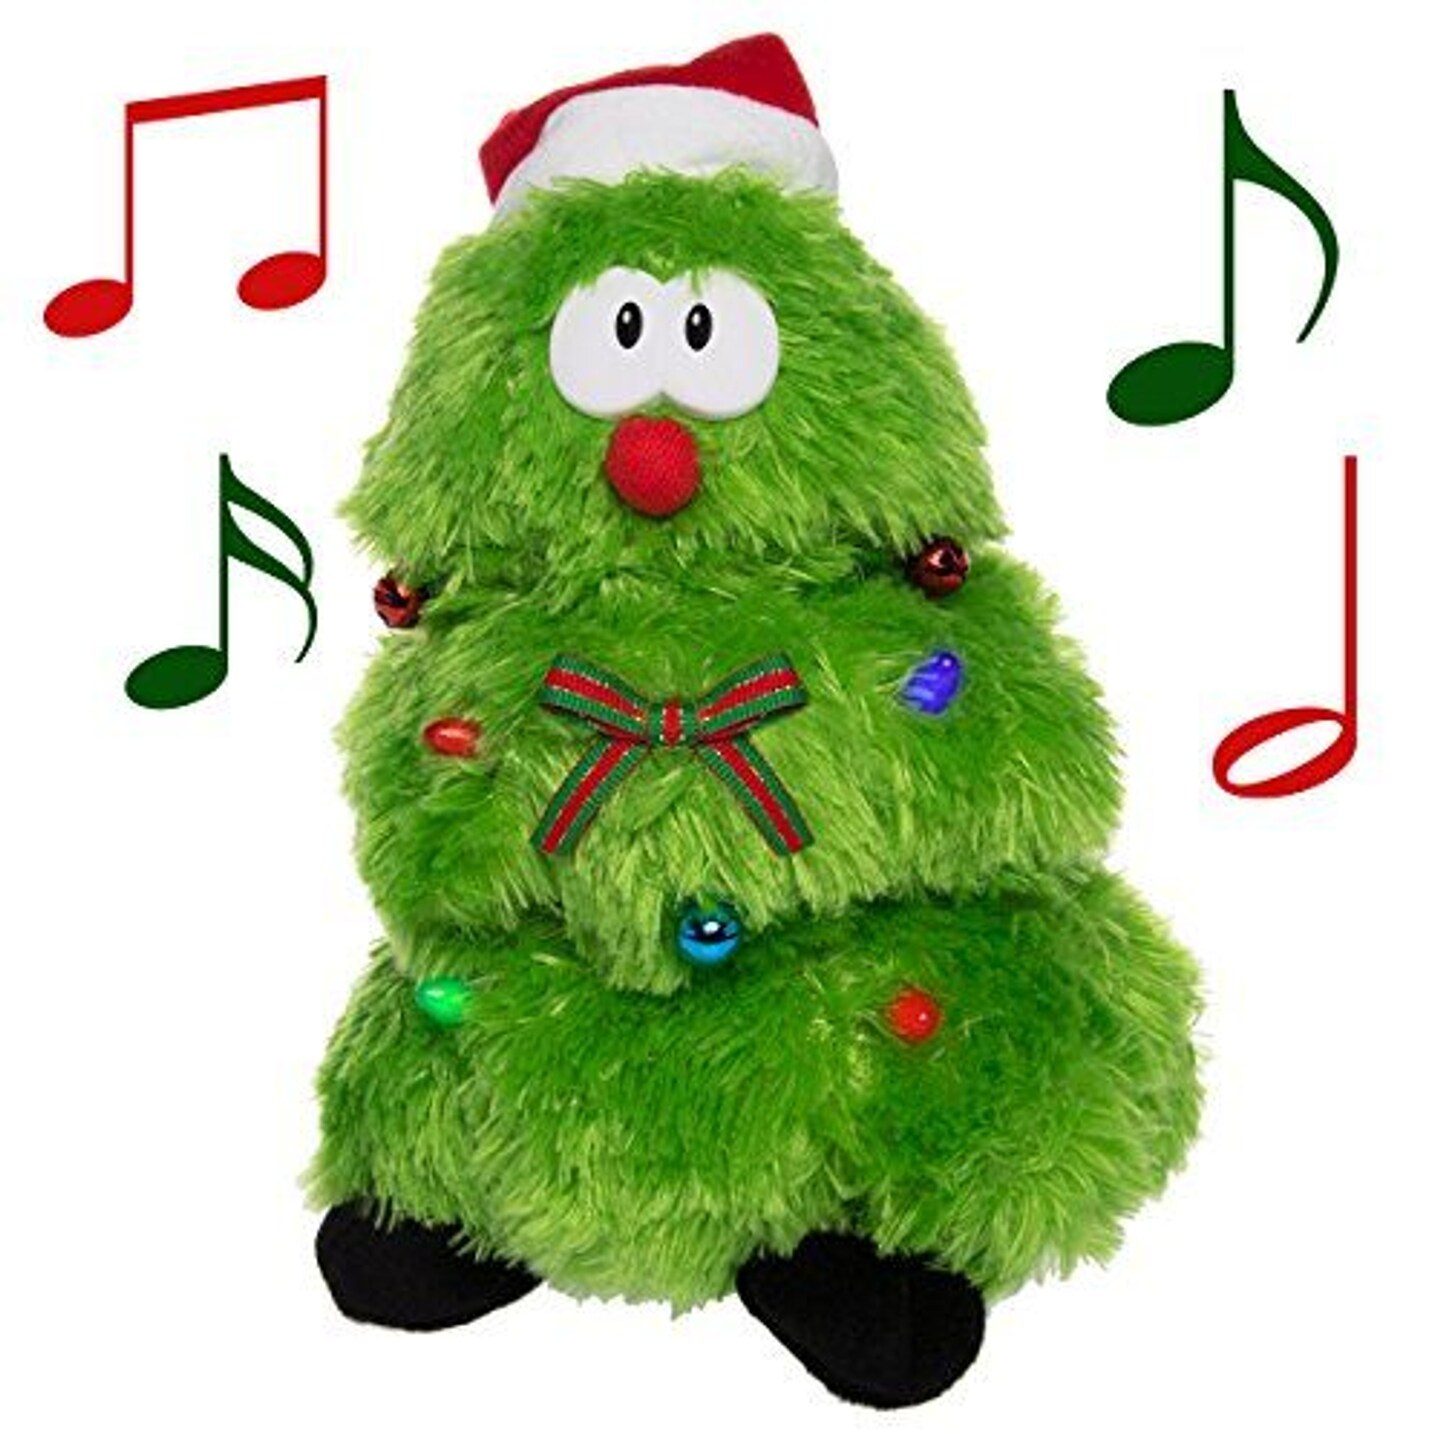 Simply Genius Singing Dancing Christmas Tree: Animated Christmas Character, 12&#x201D; Stuffed Animal Plush Christmas Tree with Music and Lights, Sings and Dances to &#x201C;Rockin&#x2019; Around the Christmas Tree&#x201D;